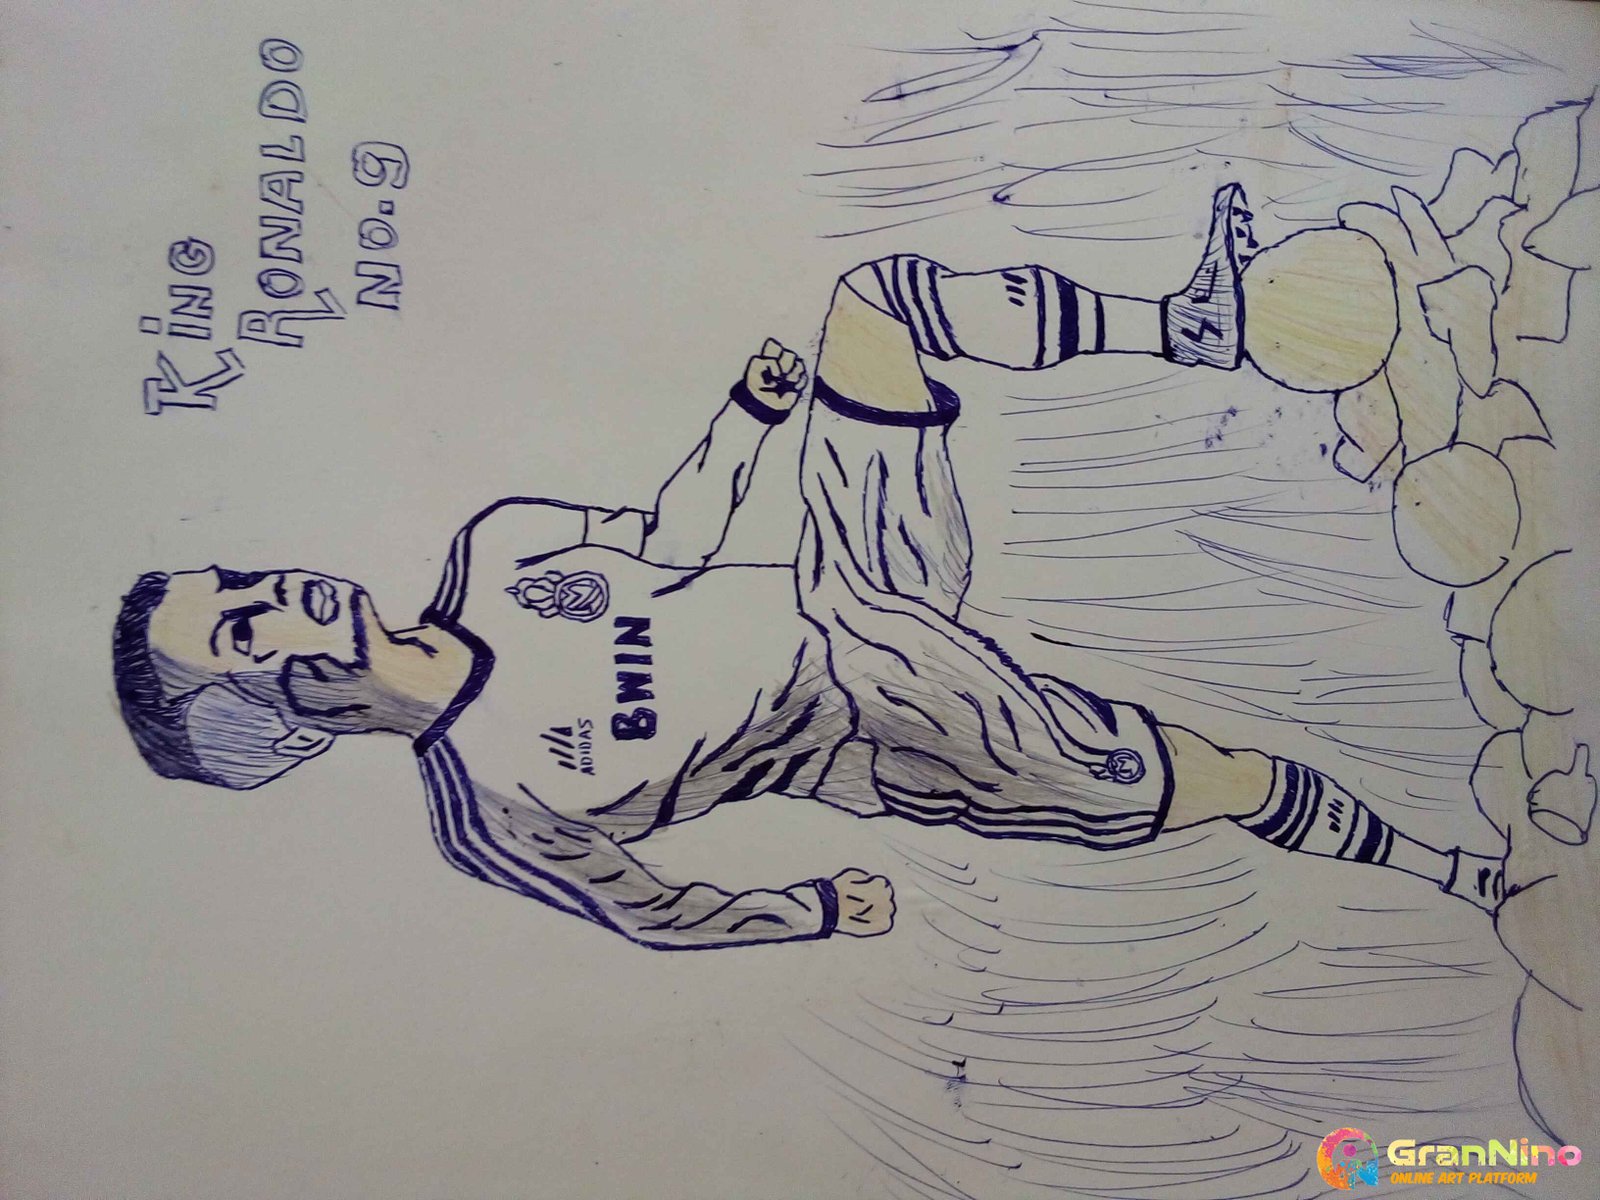 Painting Of Ronaldo In Gradnino Size 33354 Sq Cm Price 300